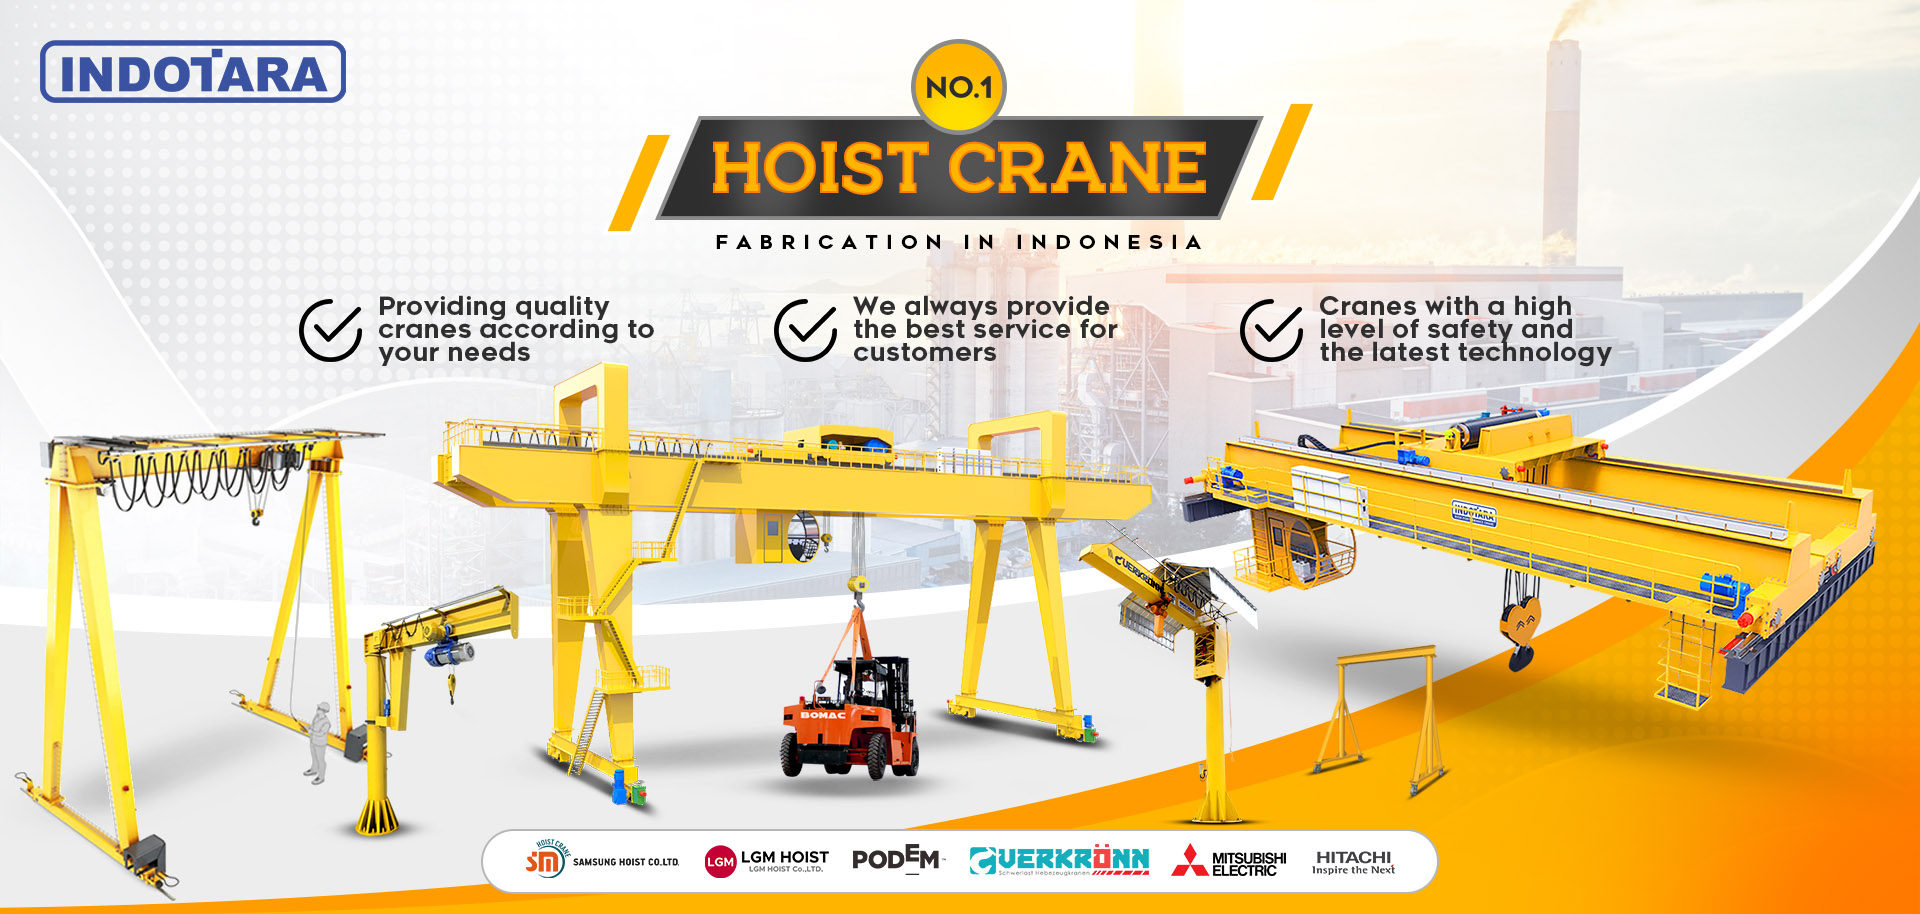 Indotara Best Fabcrication Hoist Crane in Indonesia